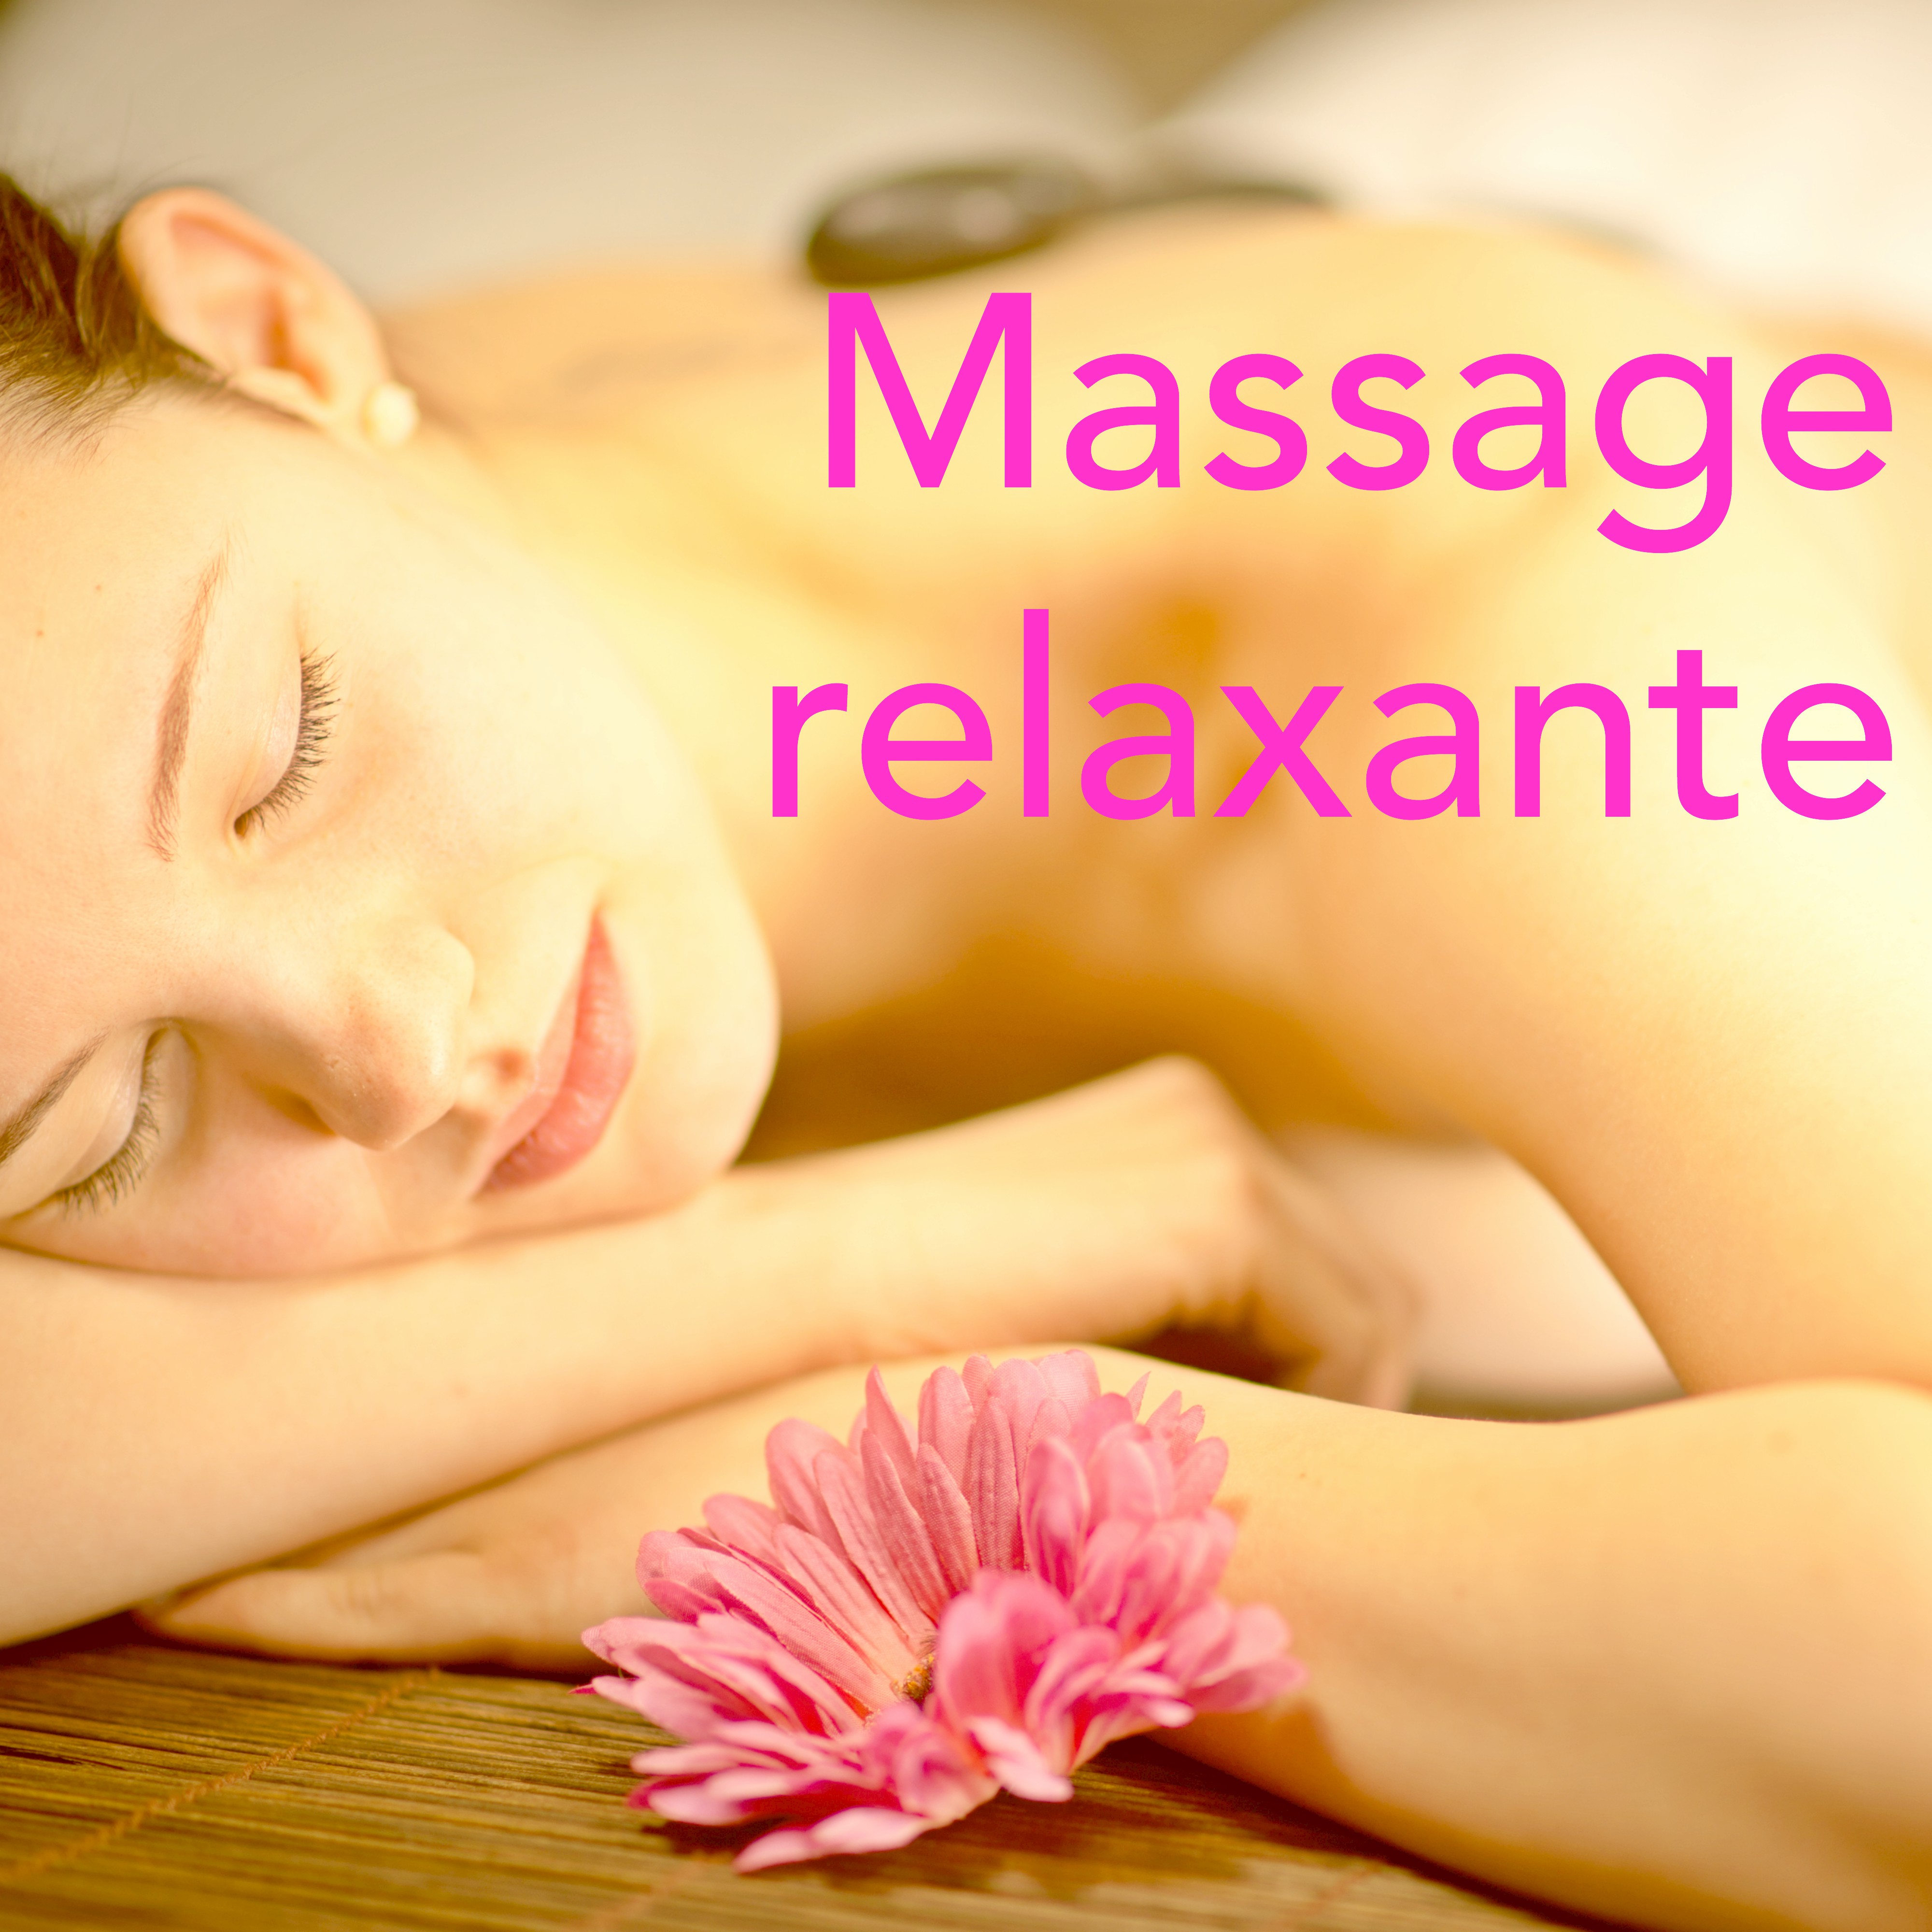 Massage relaxante